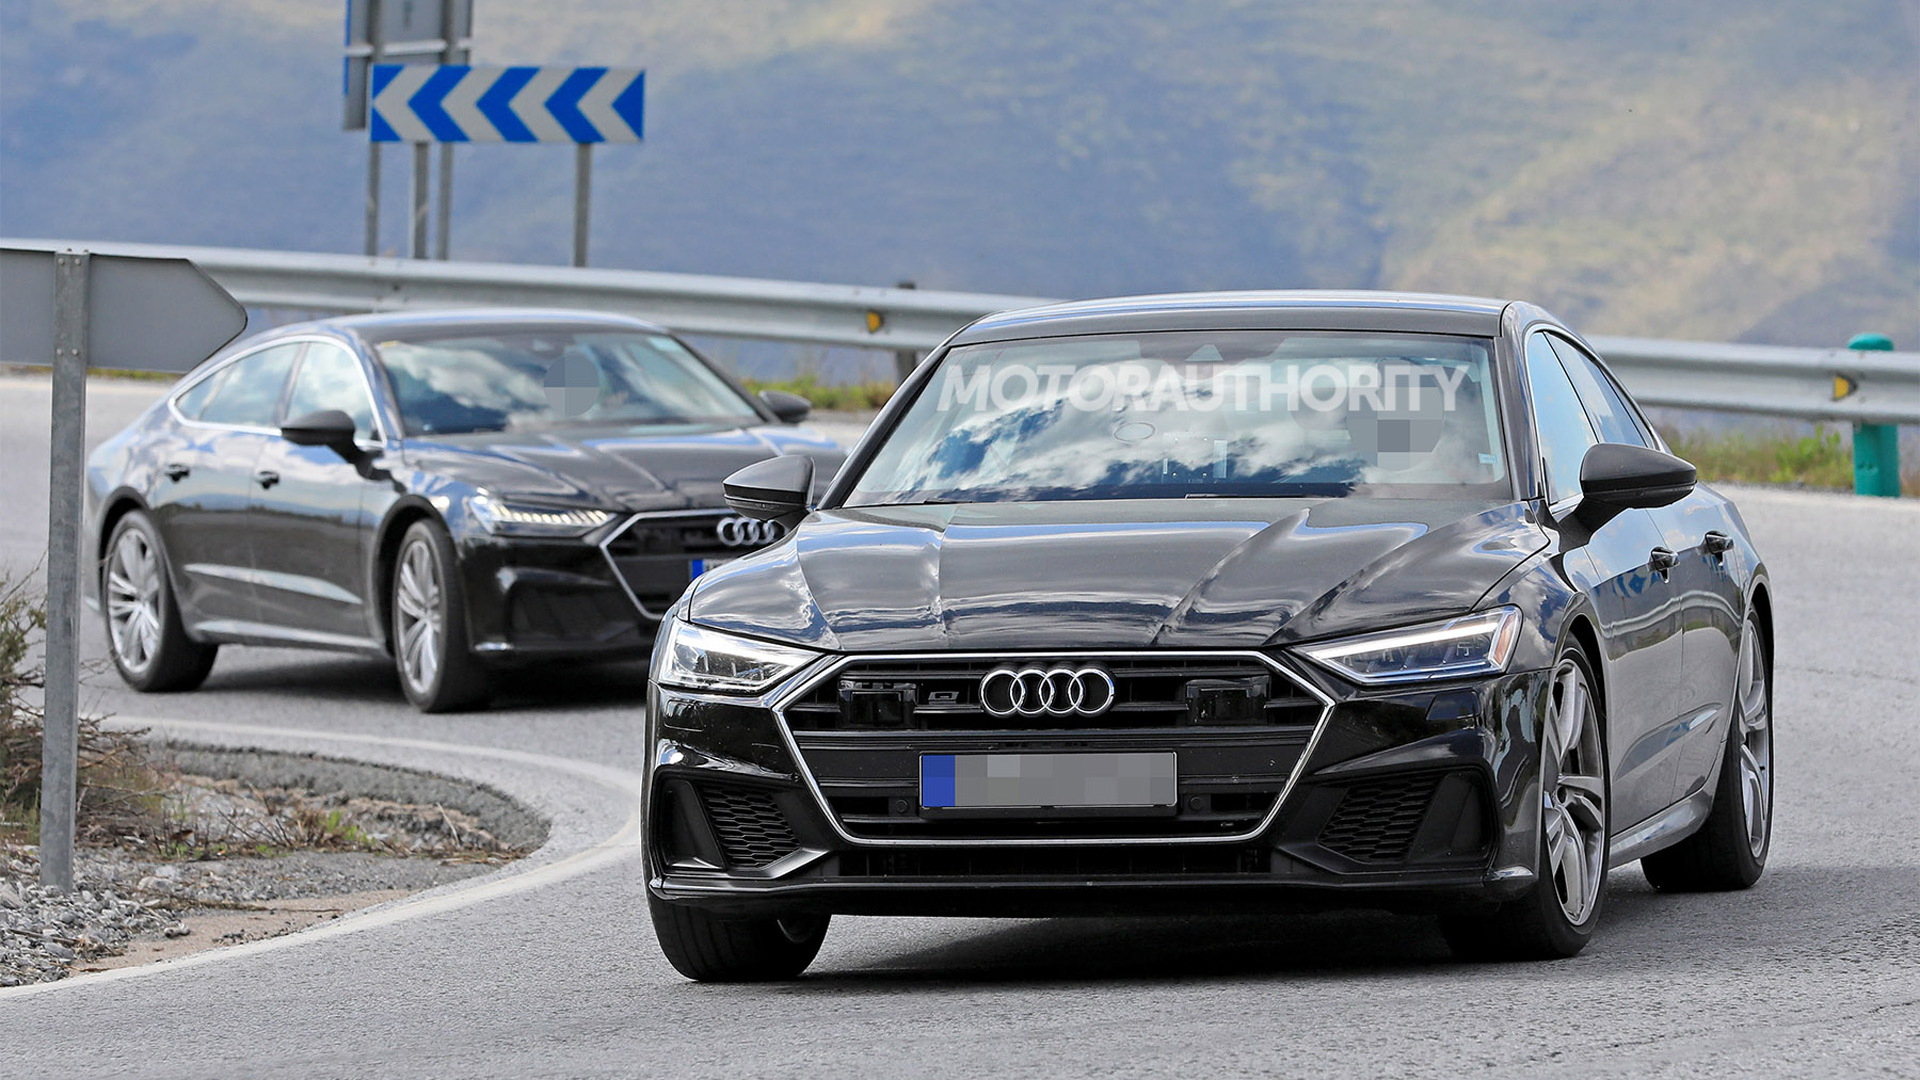 2019 Audi S7 spy shots - Image via S. Baldauf/SB-Medien